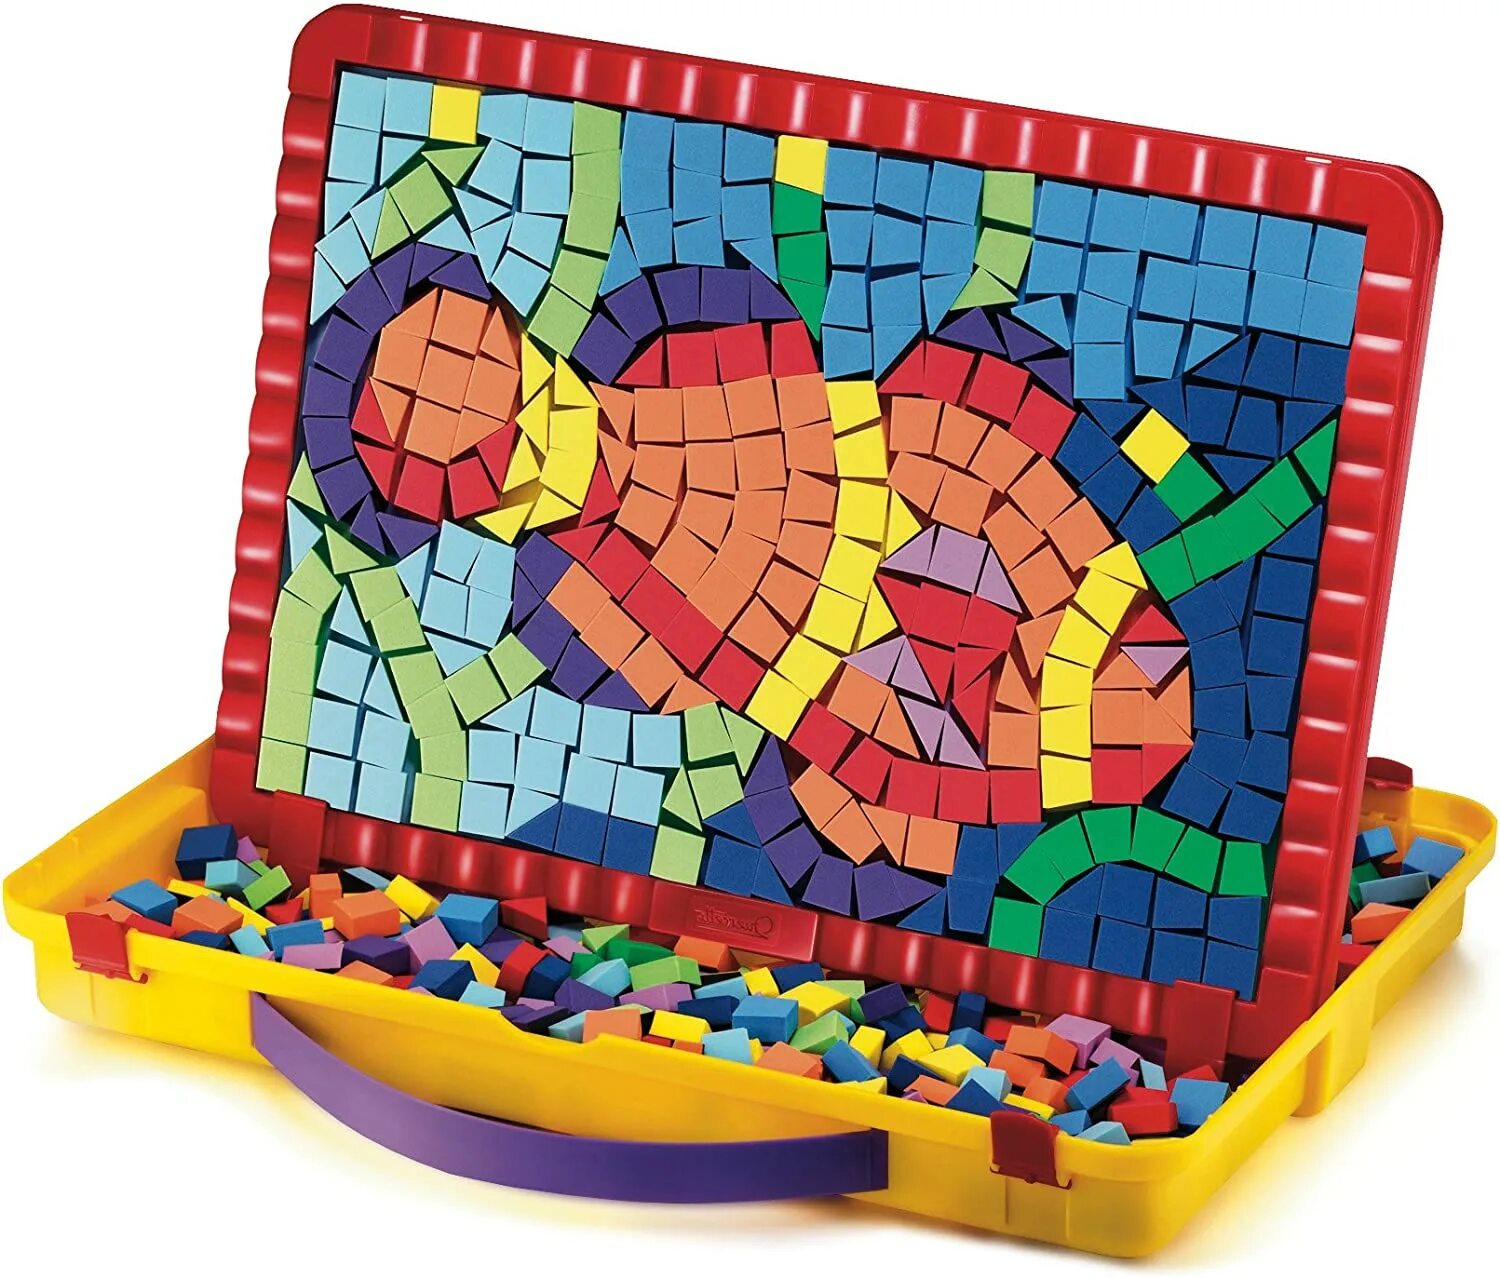 Купить мозаику в екатеринбурге. Мозаика Quercetti. Мозаика для детей. Мозаики для детей. Мозаики для детей 6 лет.